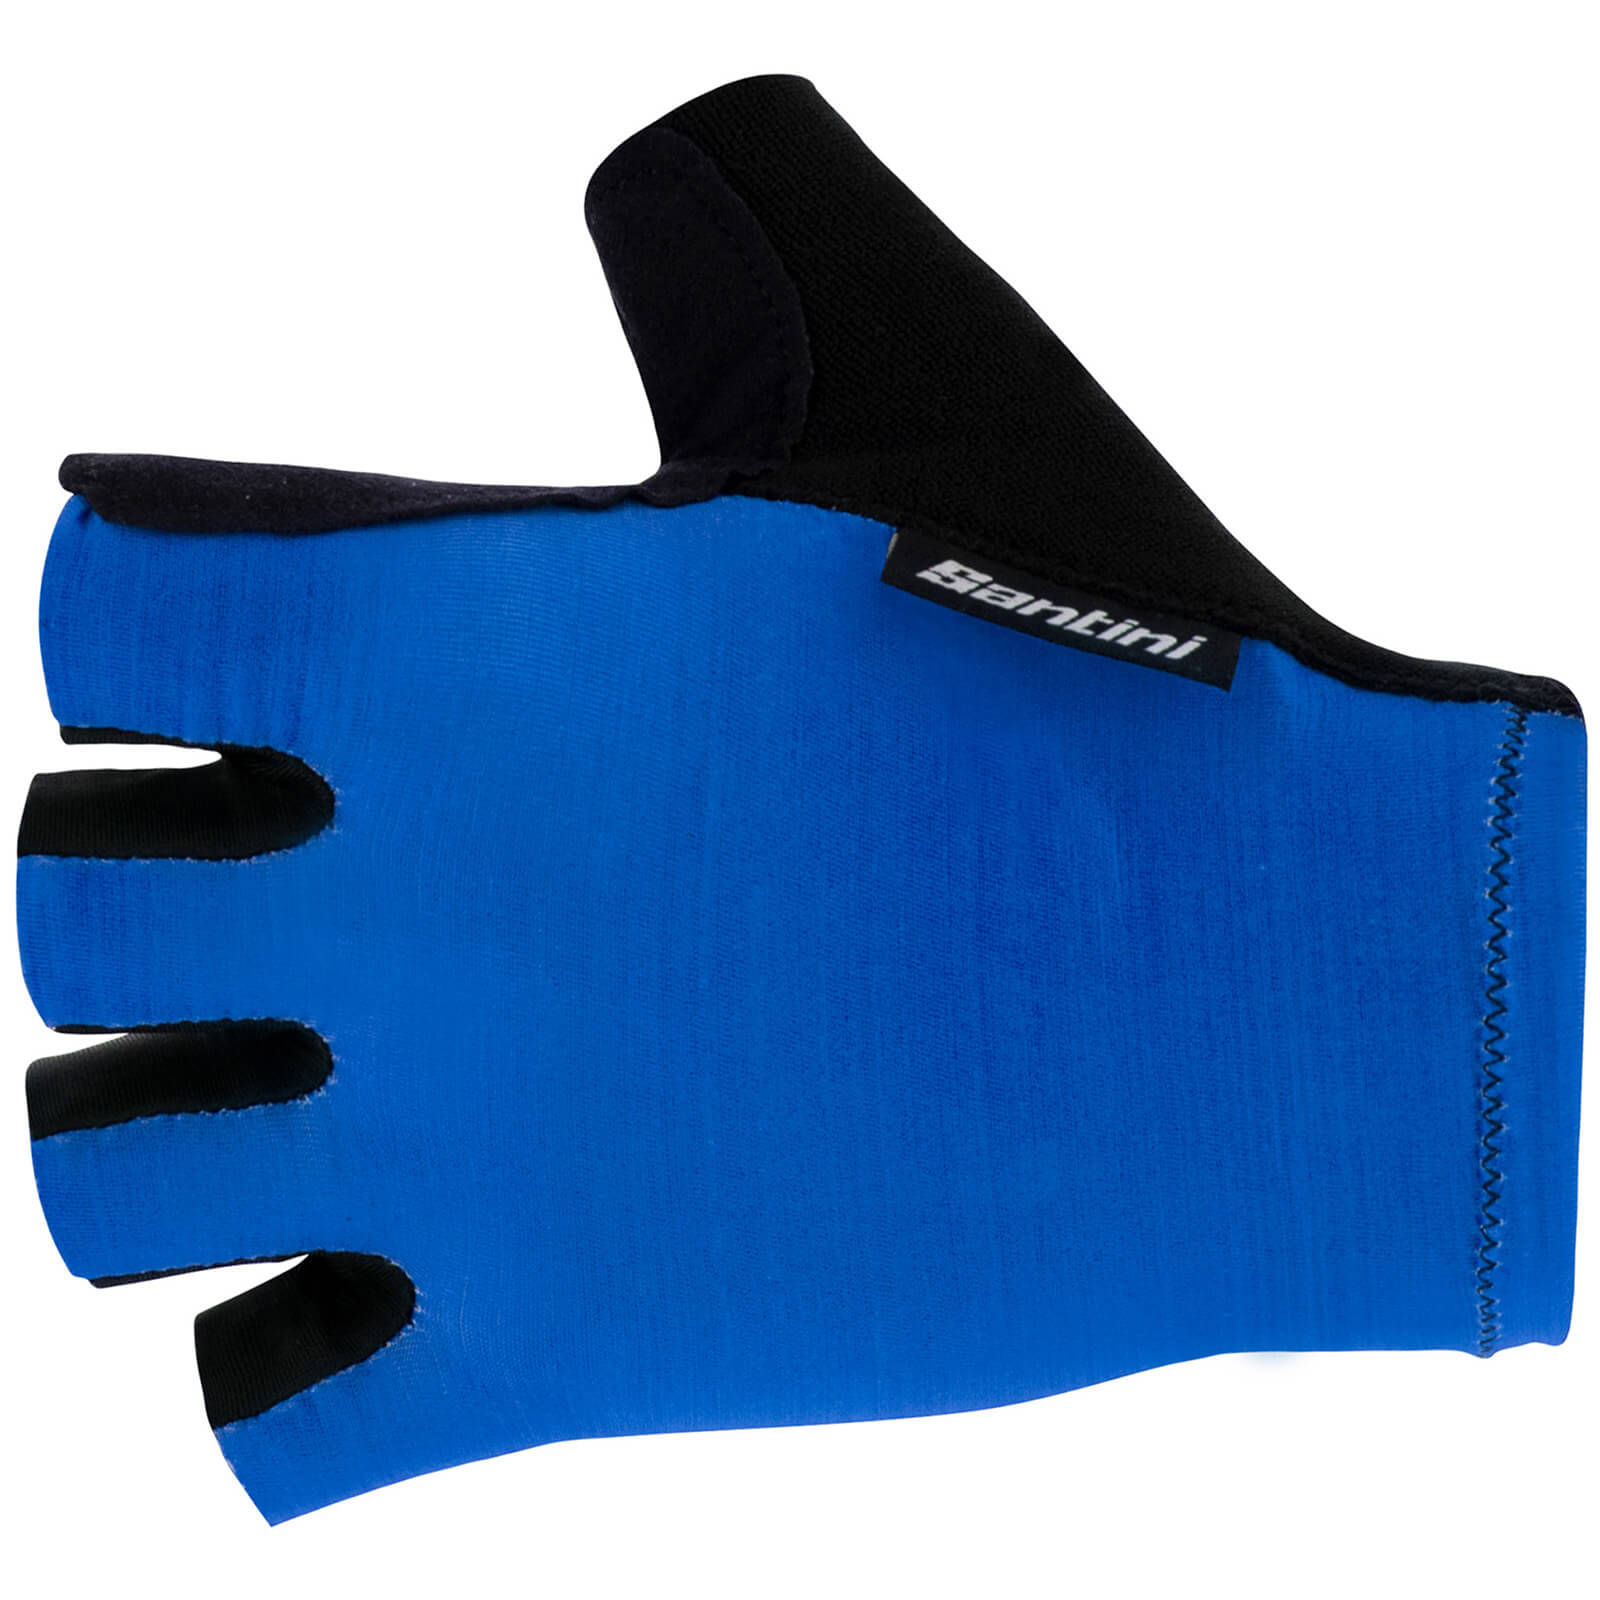 Santini Cubo Gloves - S - Royal blue